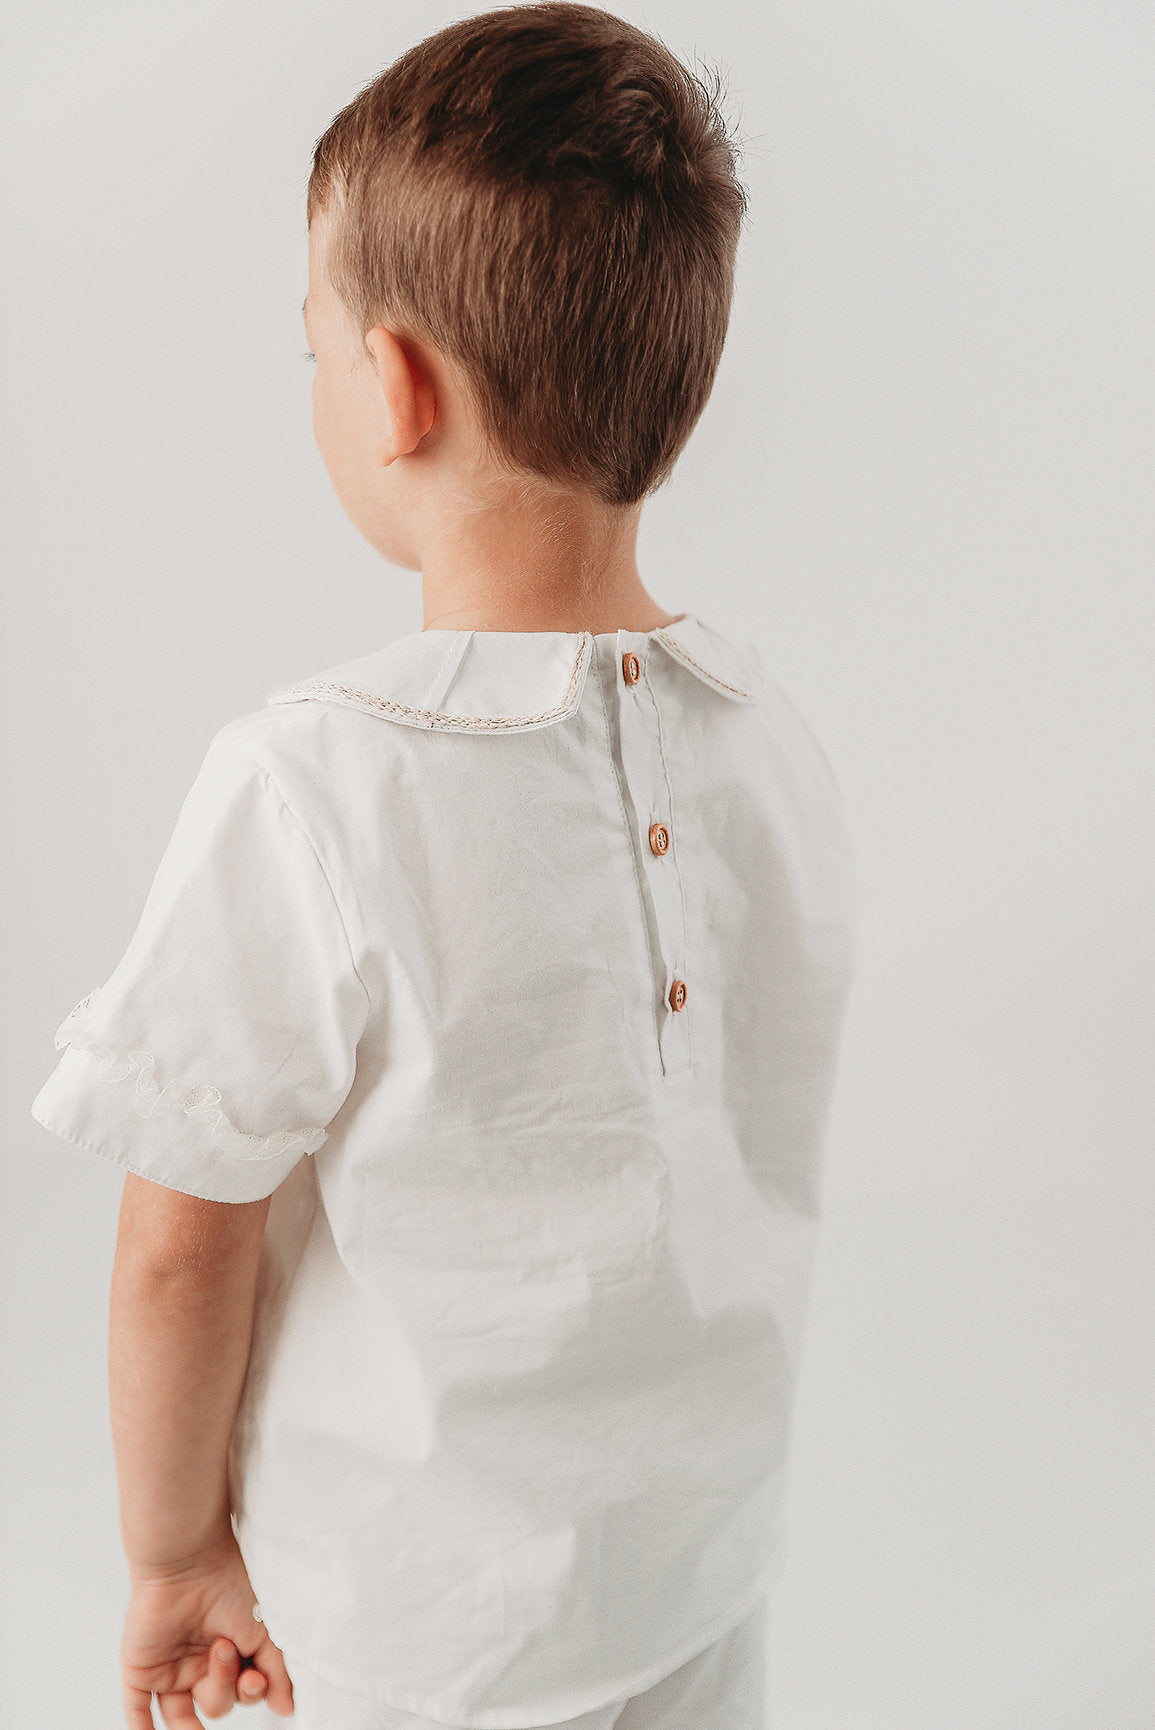 heirloom short set outfit for toddler boys